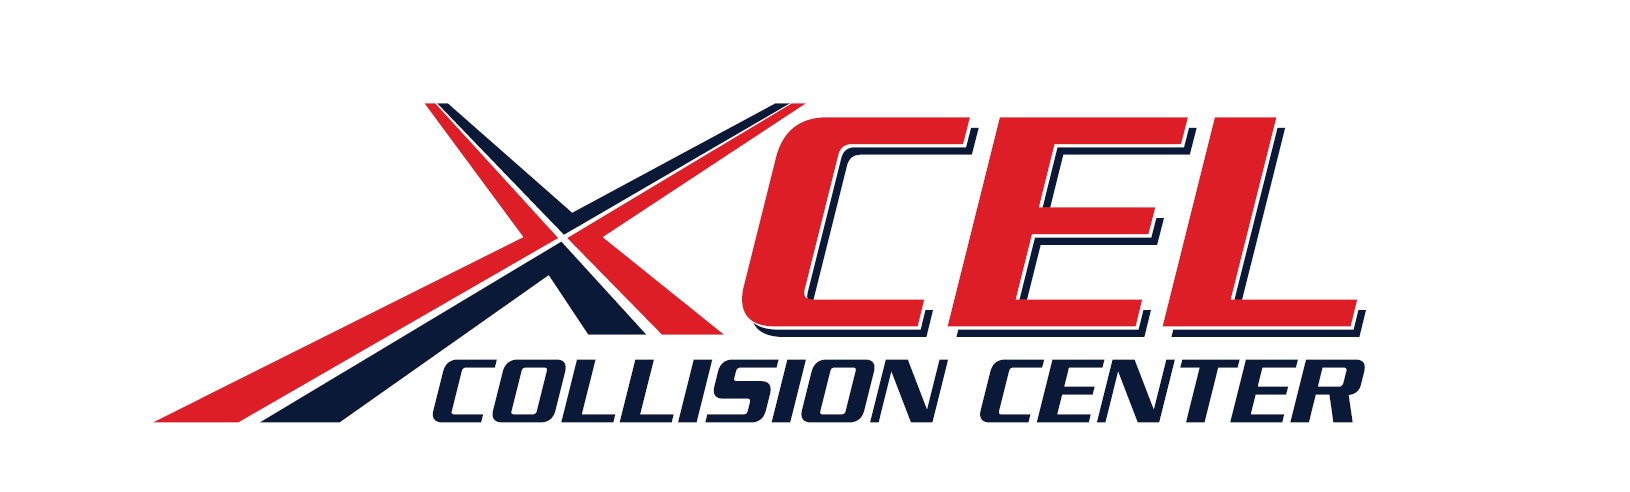 Xcel Collision Center Inc.